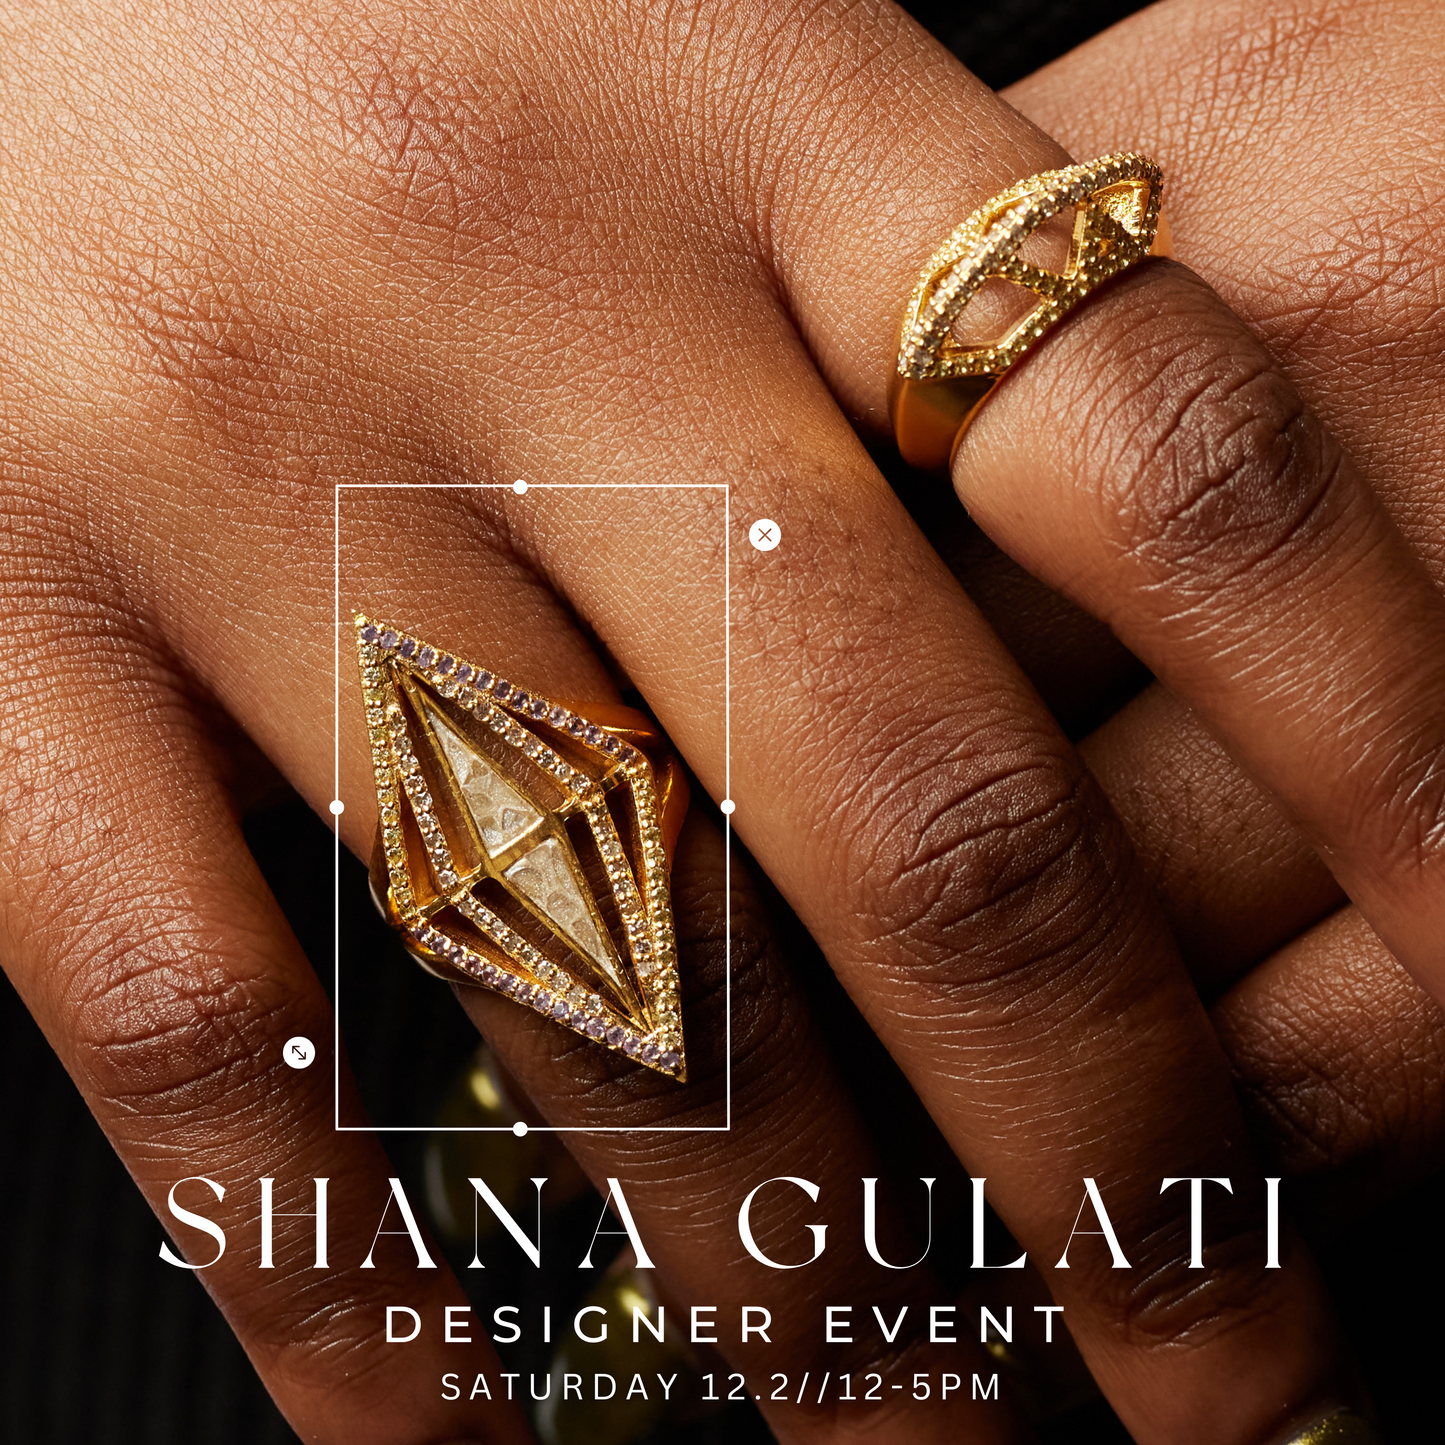 Designer Event with Shana Gulati